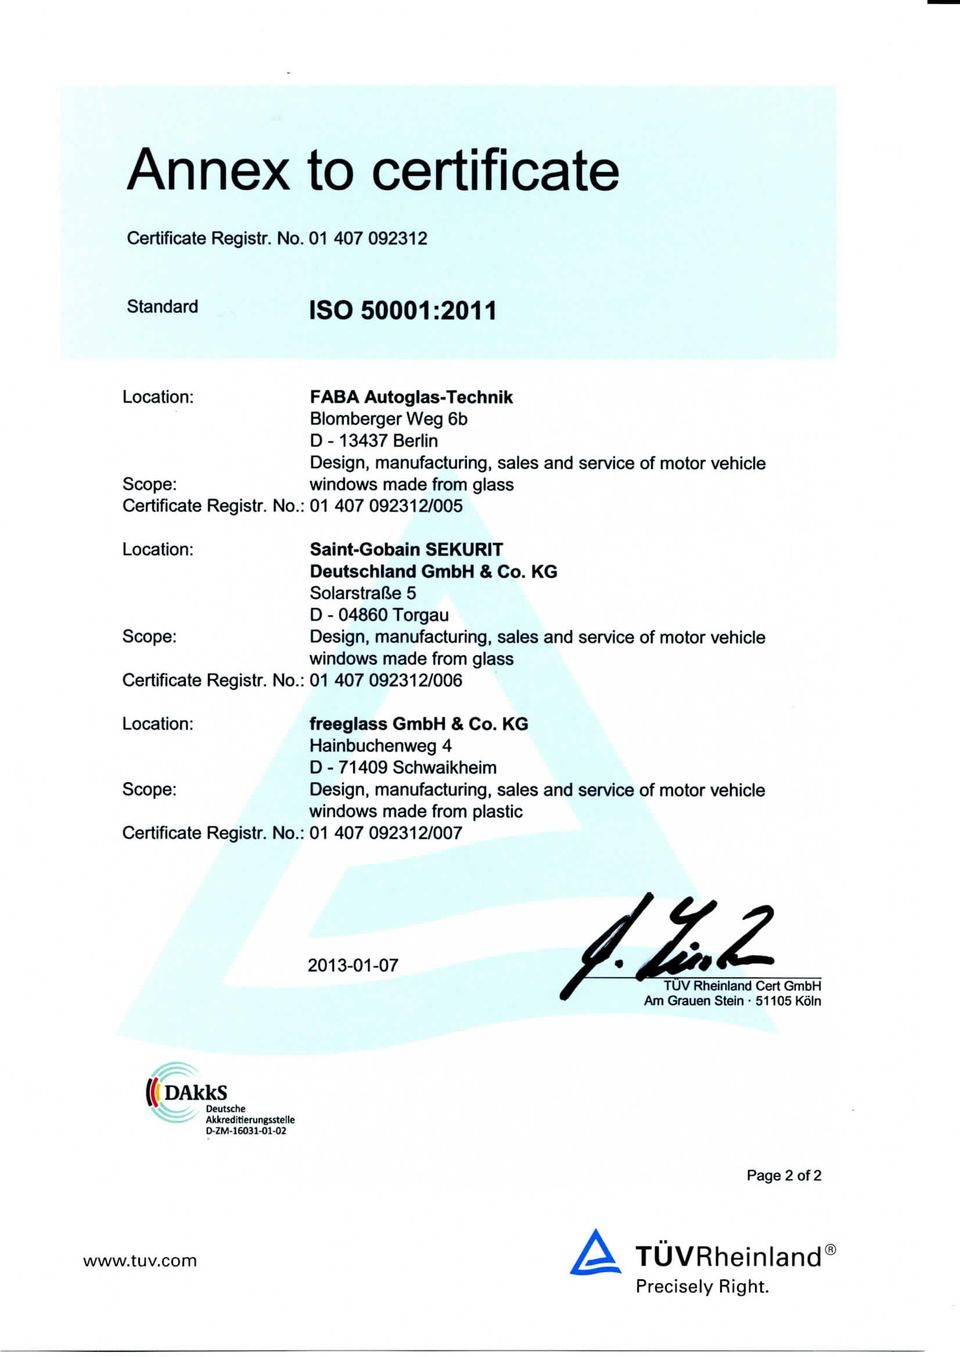 Certificate Registr. No.: 01 407 092312/005 Solarstraße 5 D - 04860 Torgau Design, manufacturing, sales and Service of motor vehicie Certificate Registr. No.: 01 407 092312/006 freeglass GmbH & Co.